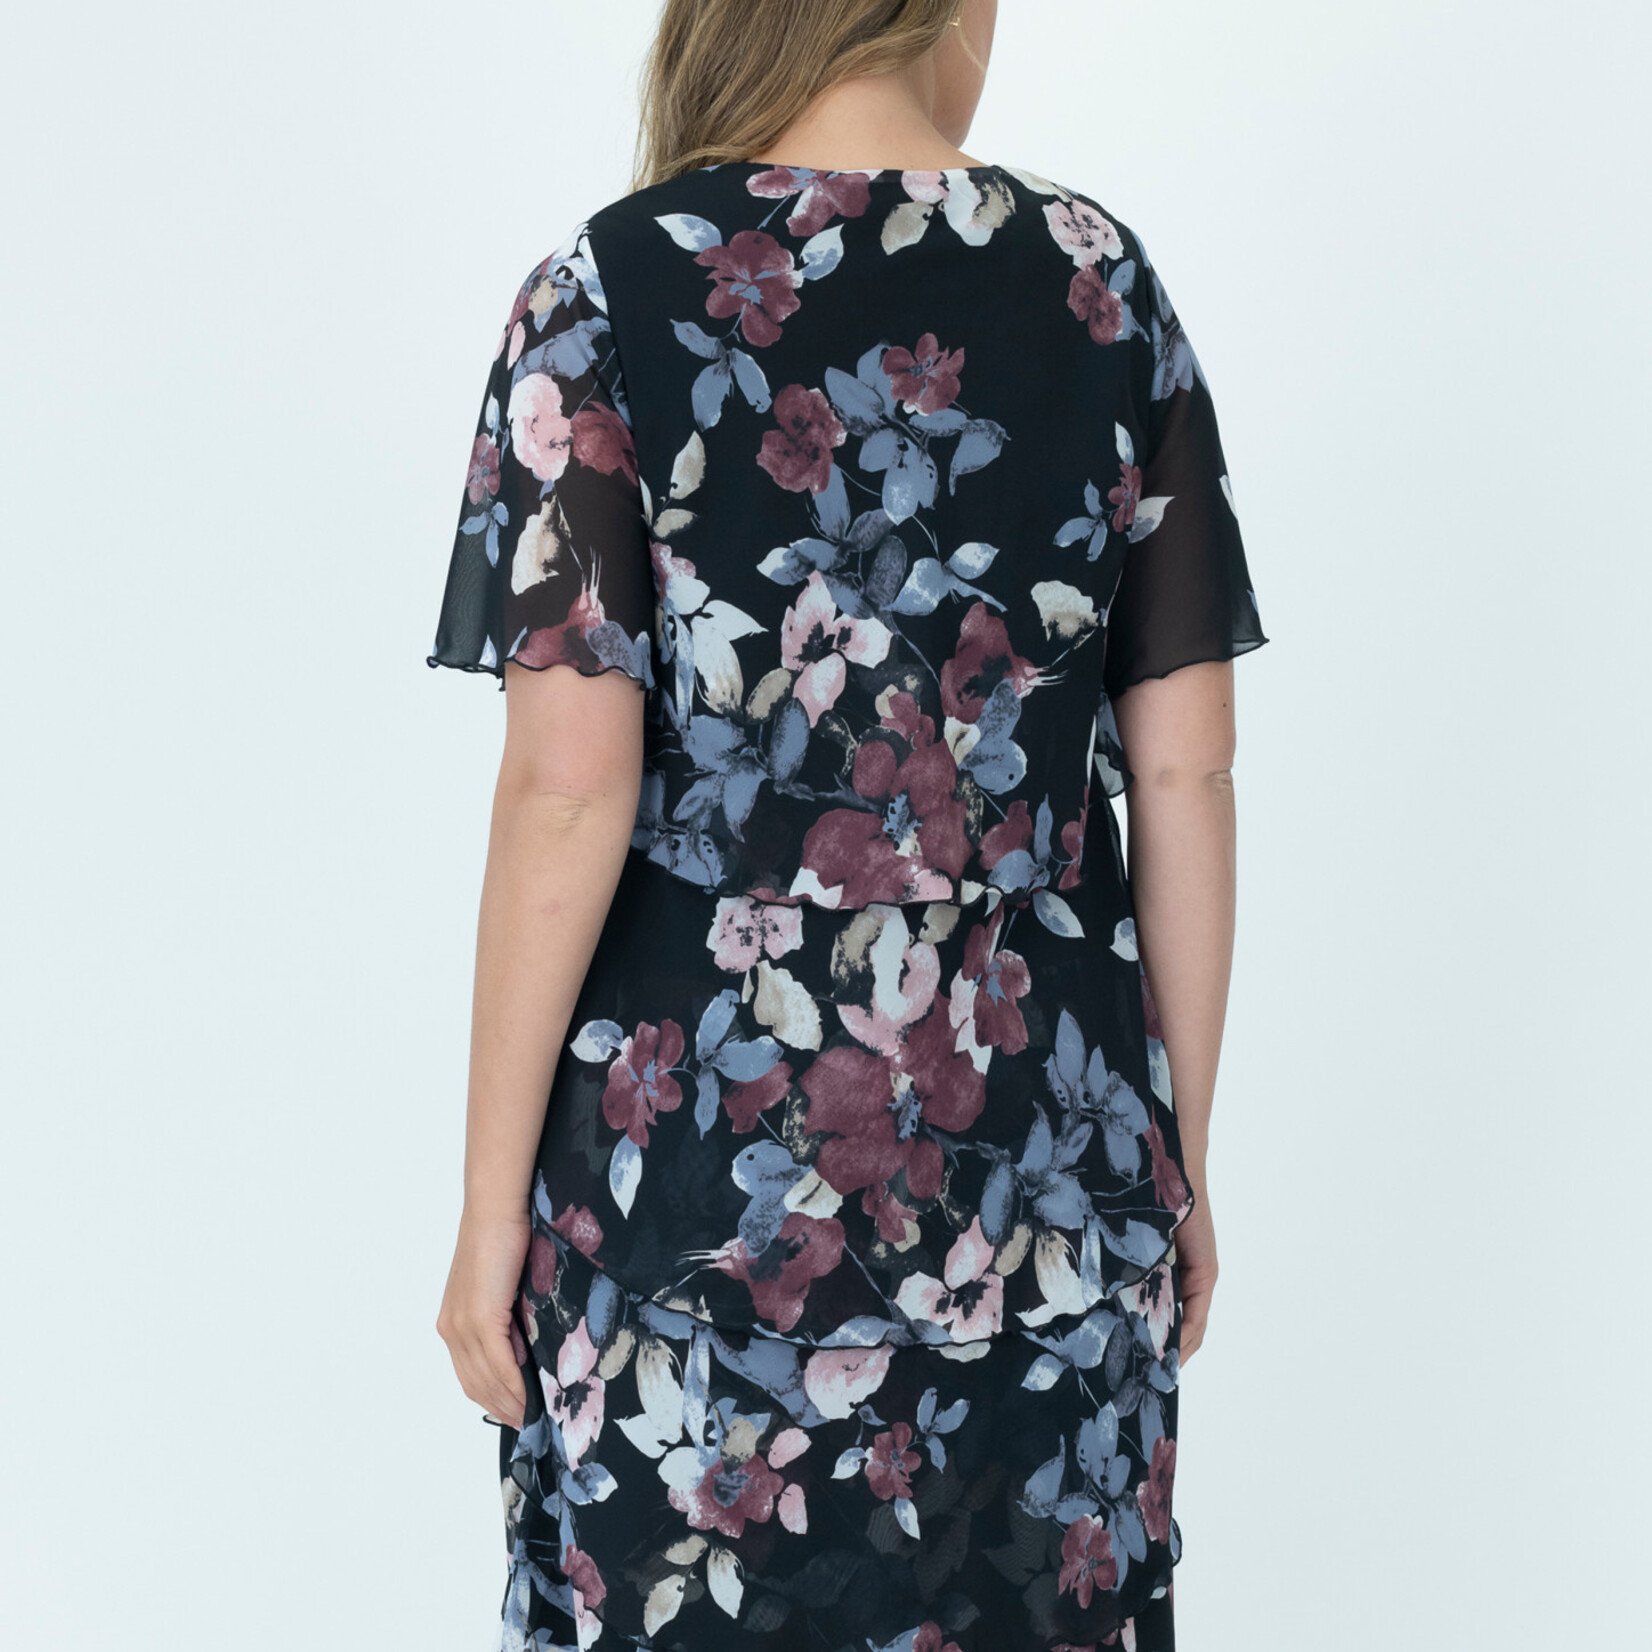 Vivid International Black Florals Layered Short Sleeve Dress